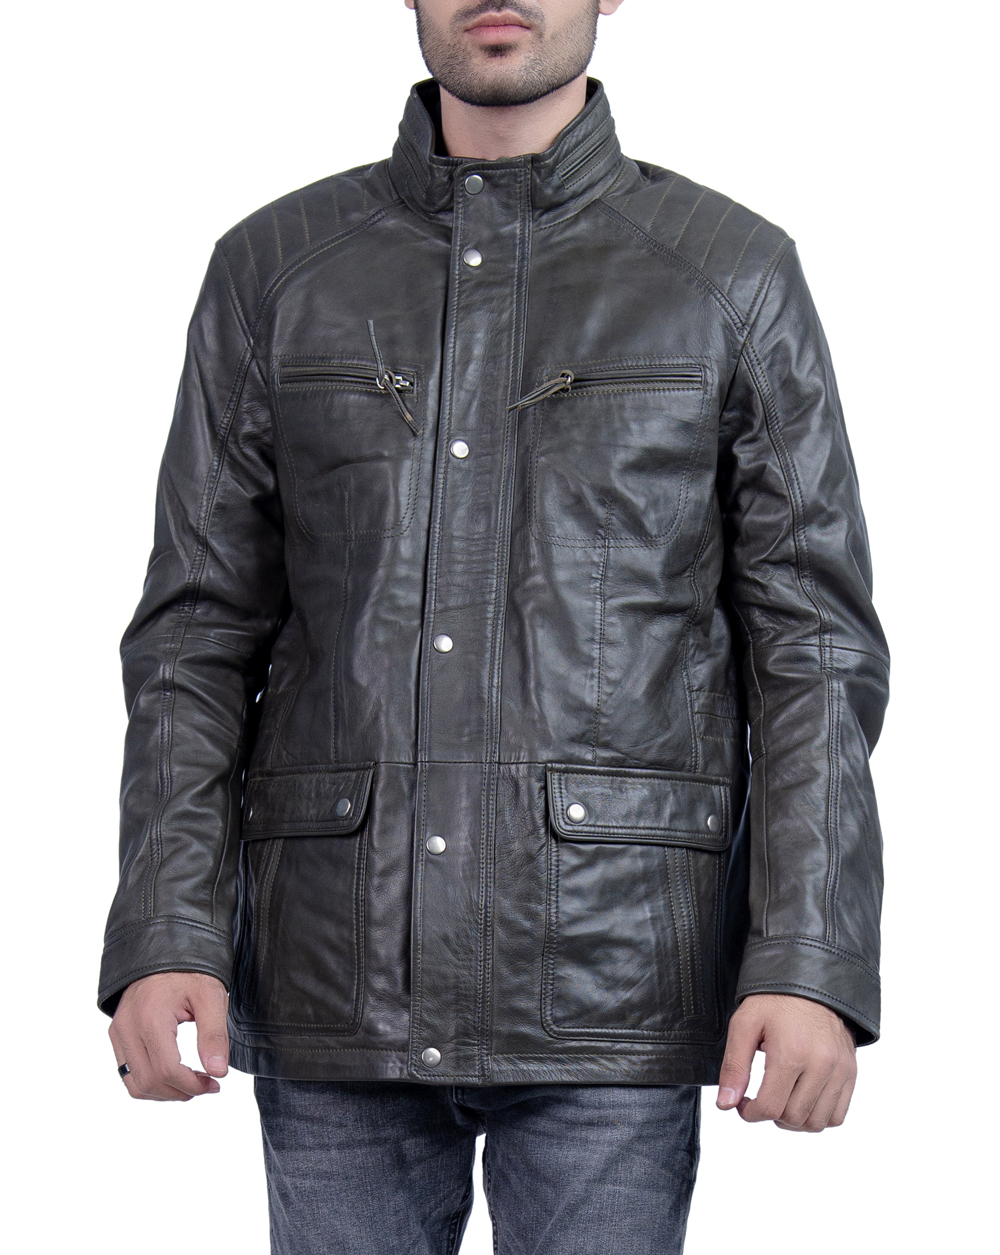 Buy Bosom Biker Leather Jacket